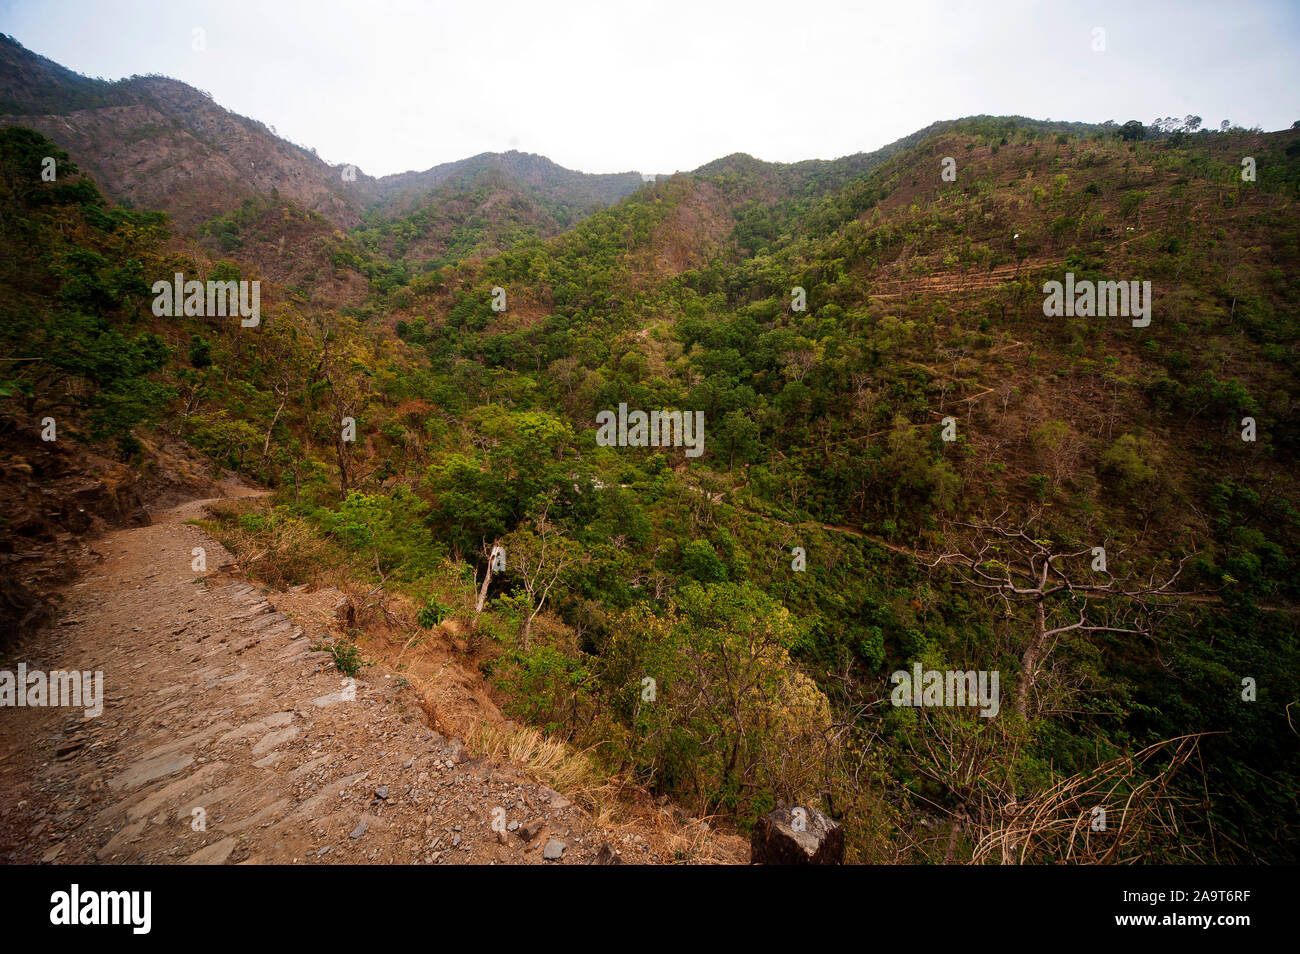 Dense forest at the Nandhour Valley, Kumaon Hills, Uttarakhand, India Stock Photo